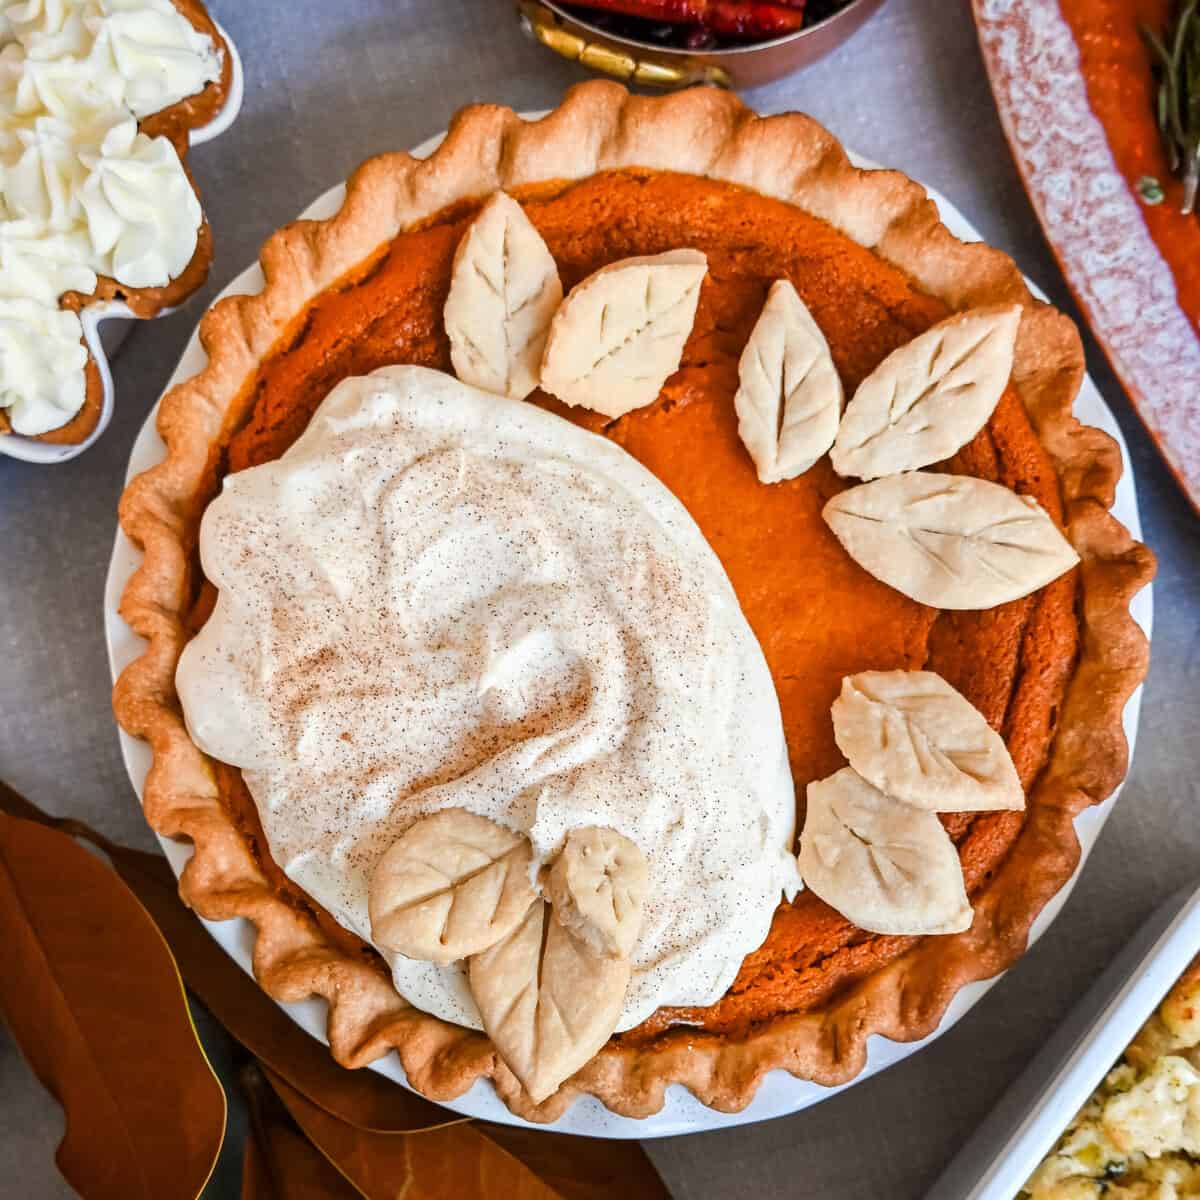 The Best Pumpkin Pie Recipe. Award-winning creamy pumpkin pie recipe has a secret ingredient to make it extra special! This is the best pumpkin pie recipe and won the best pumpkin pie on the internet!